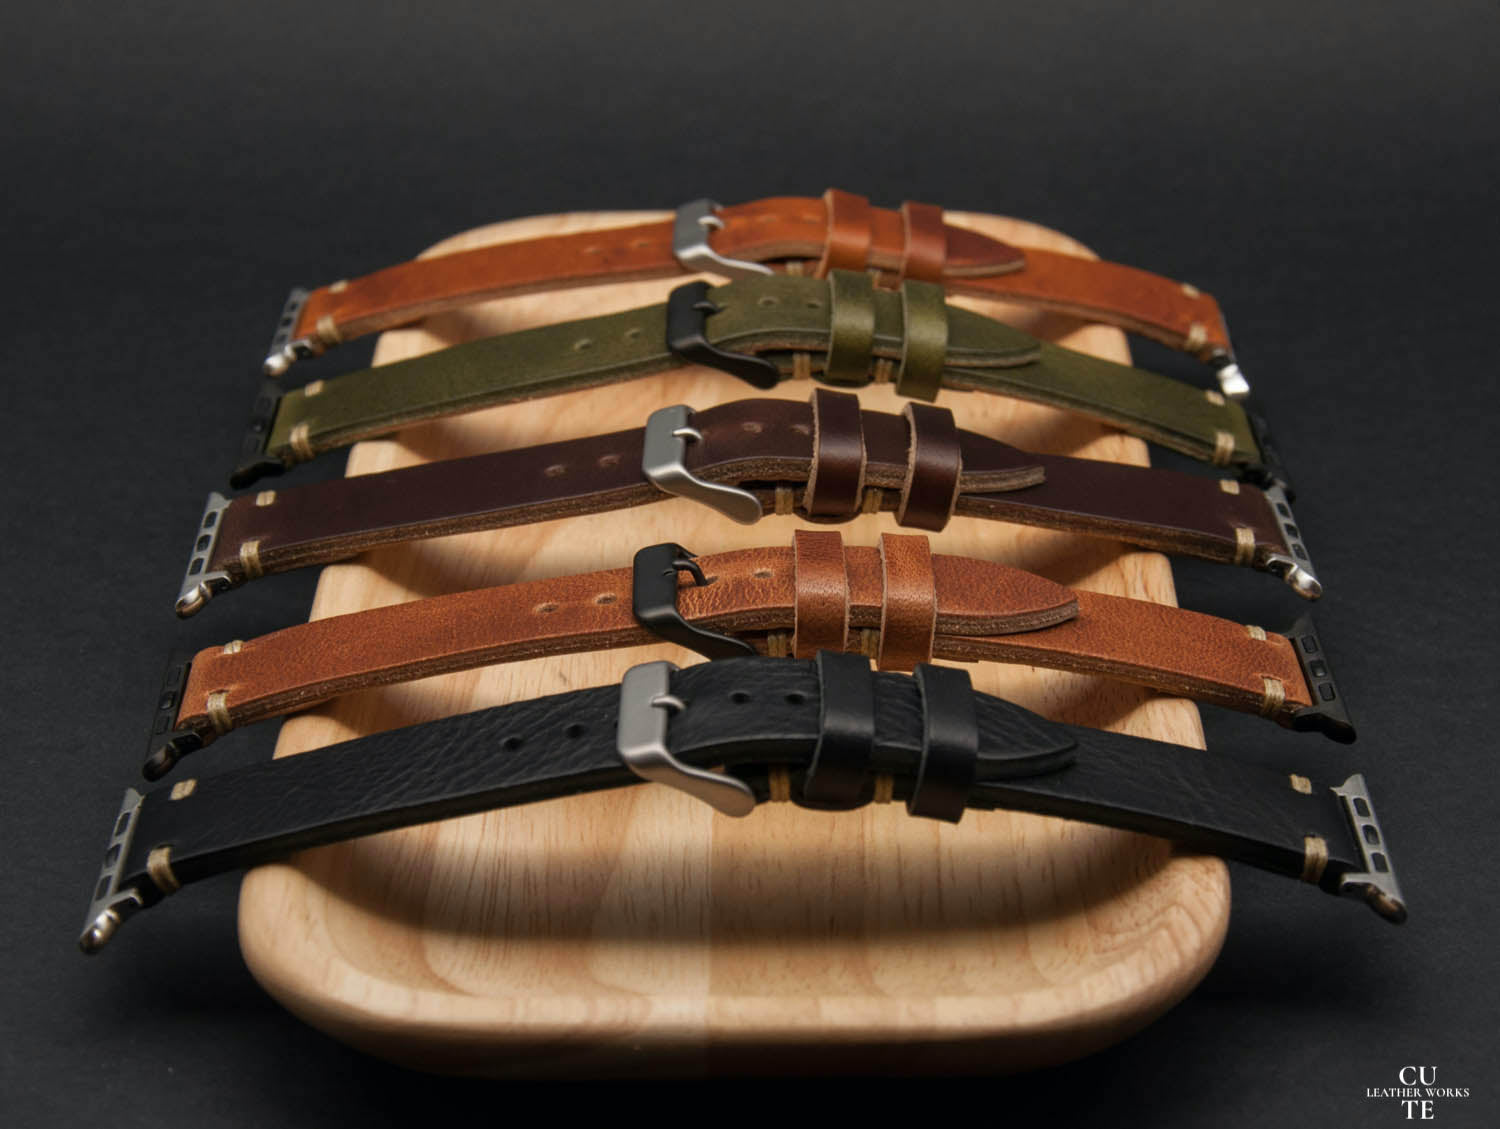 Apple Watch Band, Badalassi Wax Olmo Leather